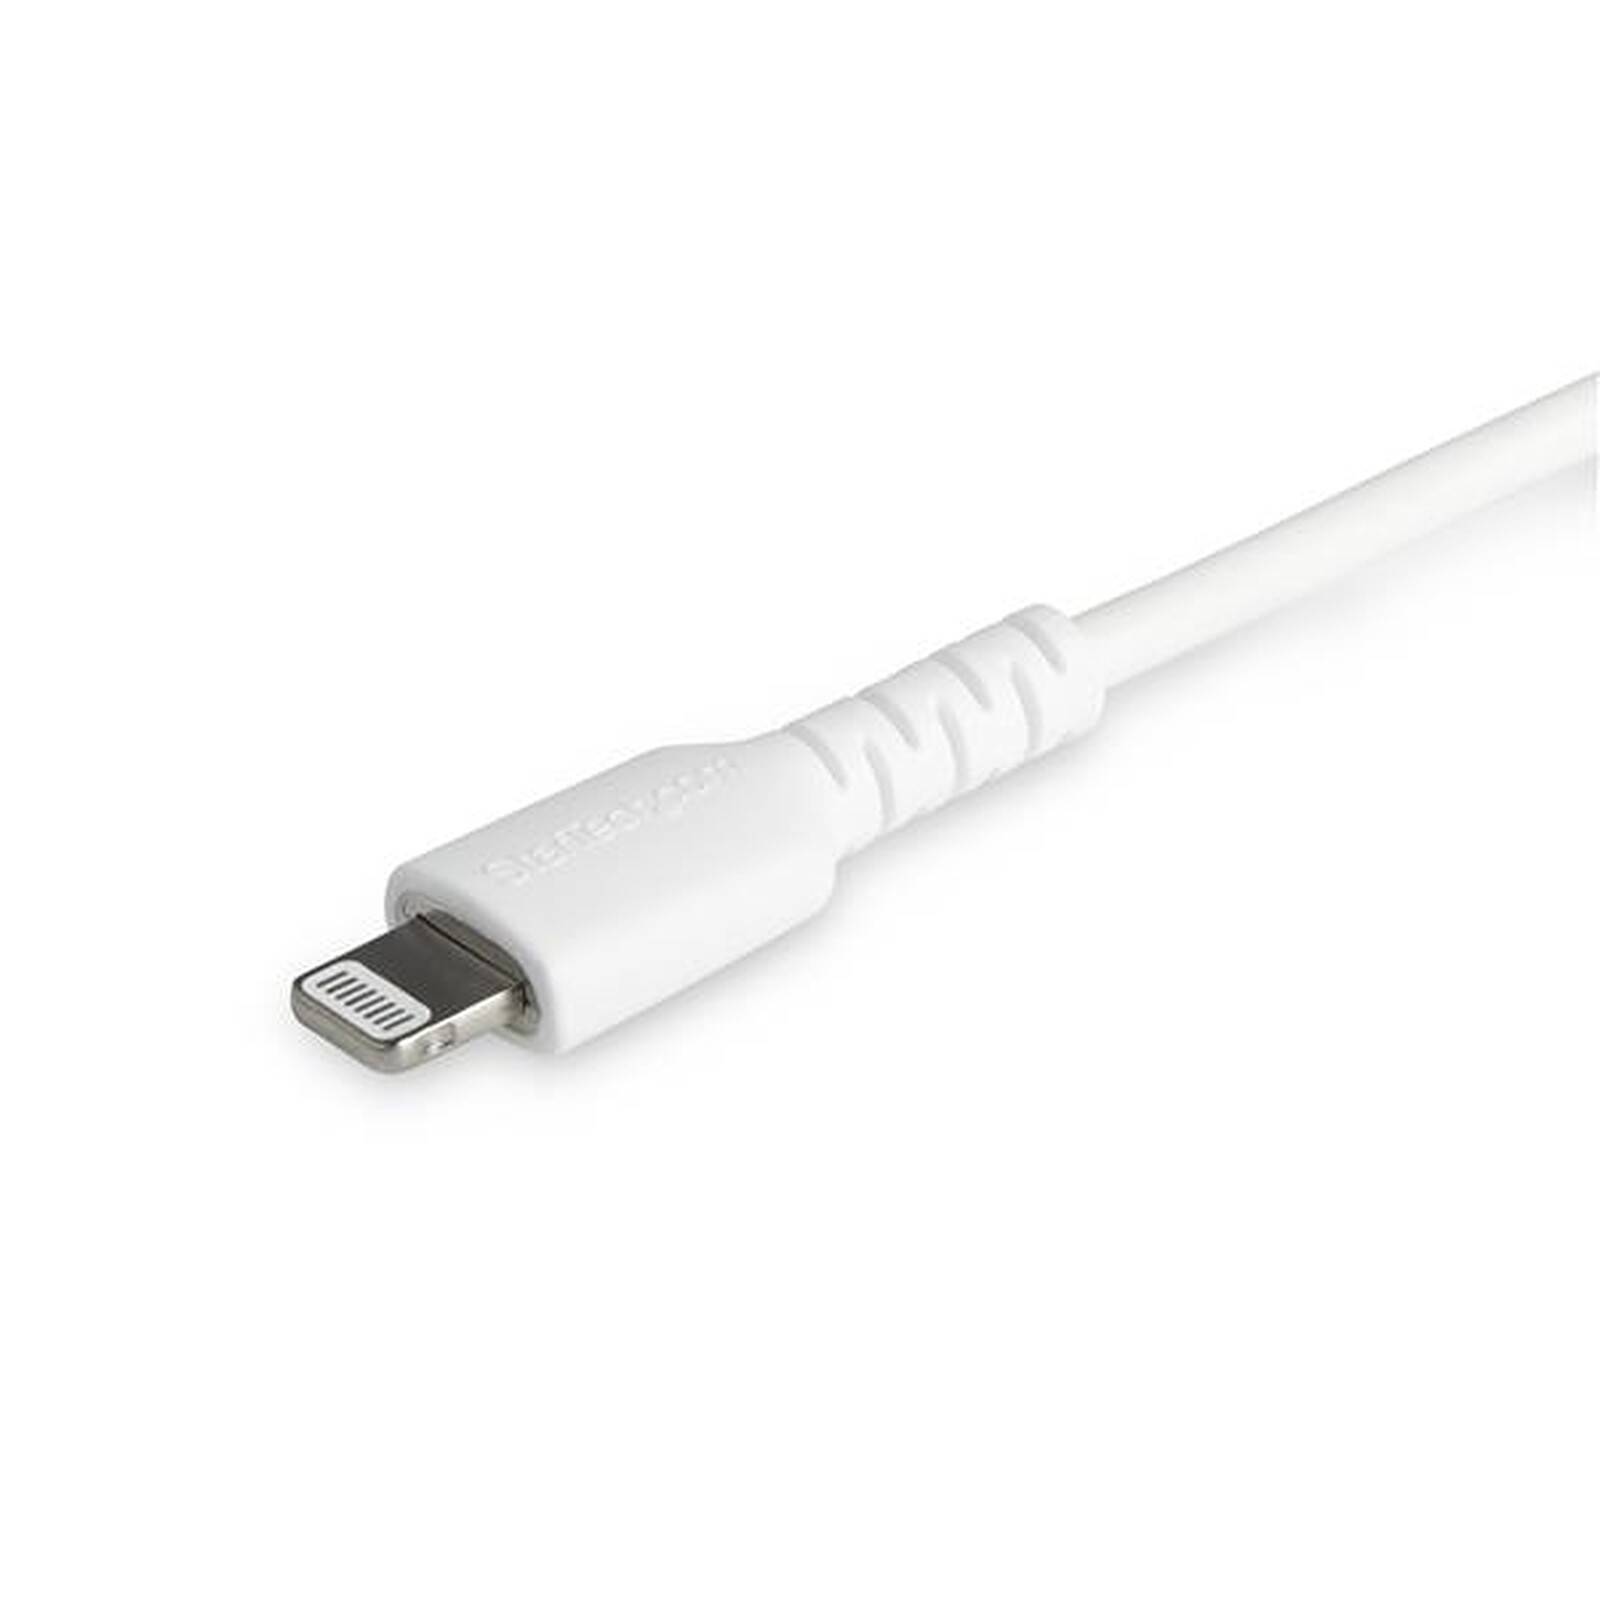 Cable Apple Lightning a USB (2m) Blanco